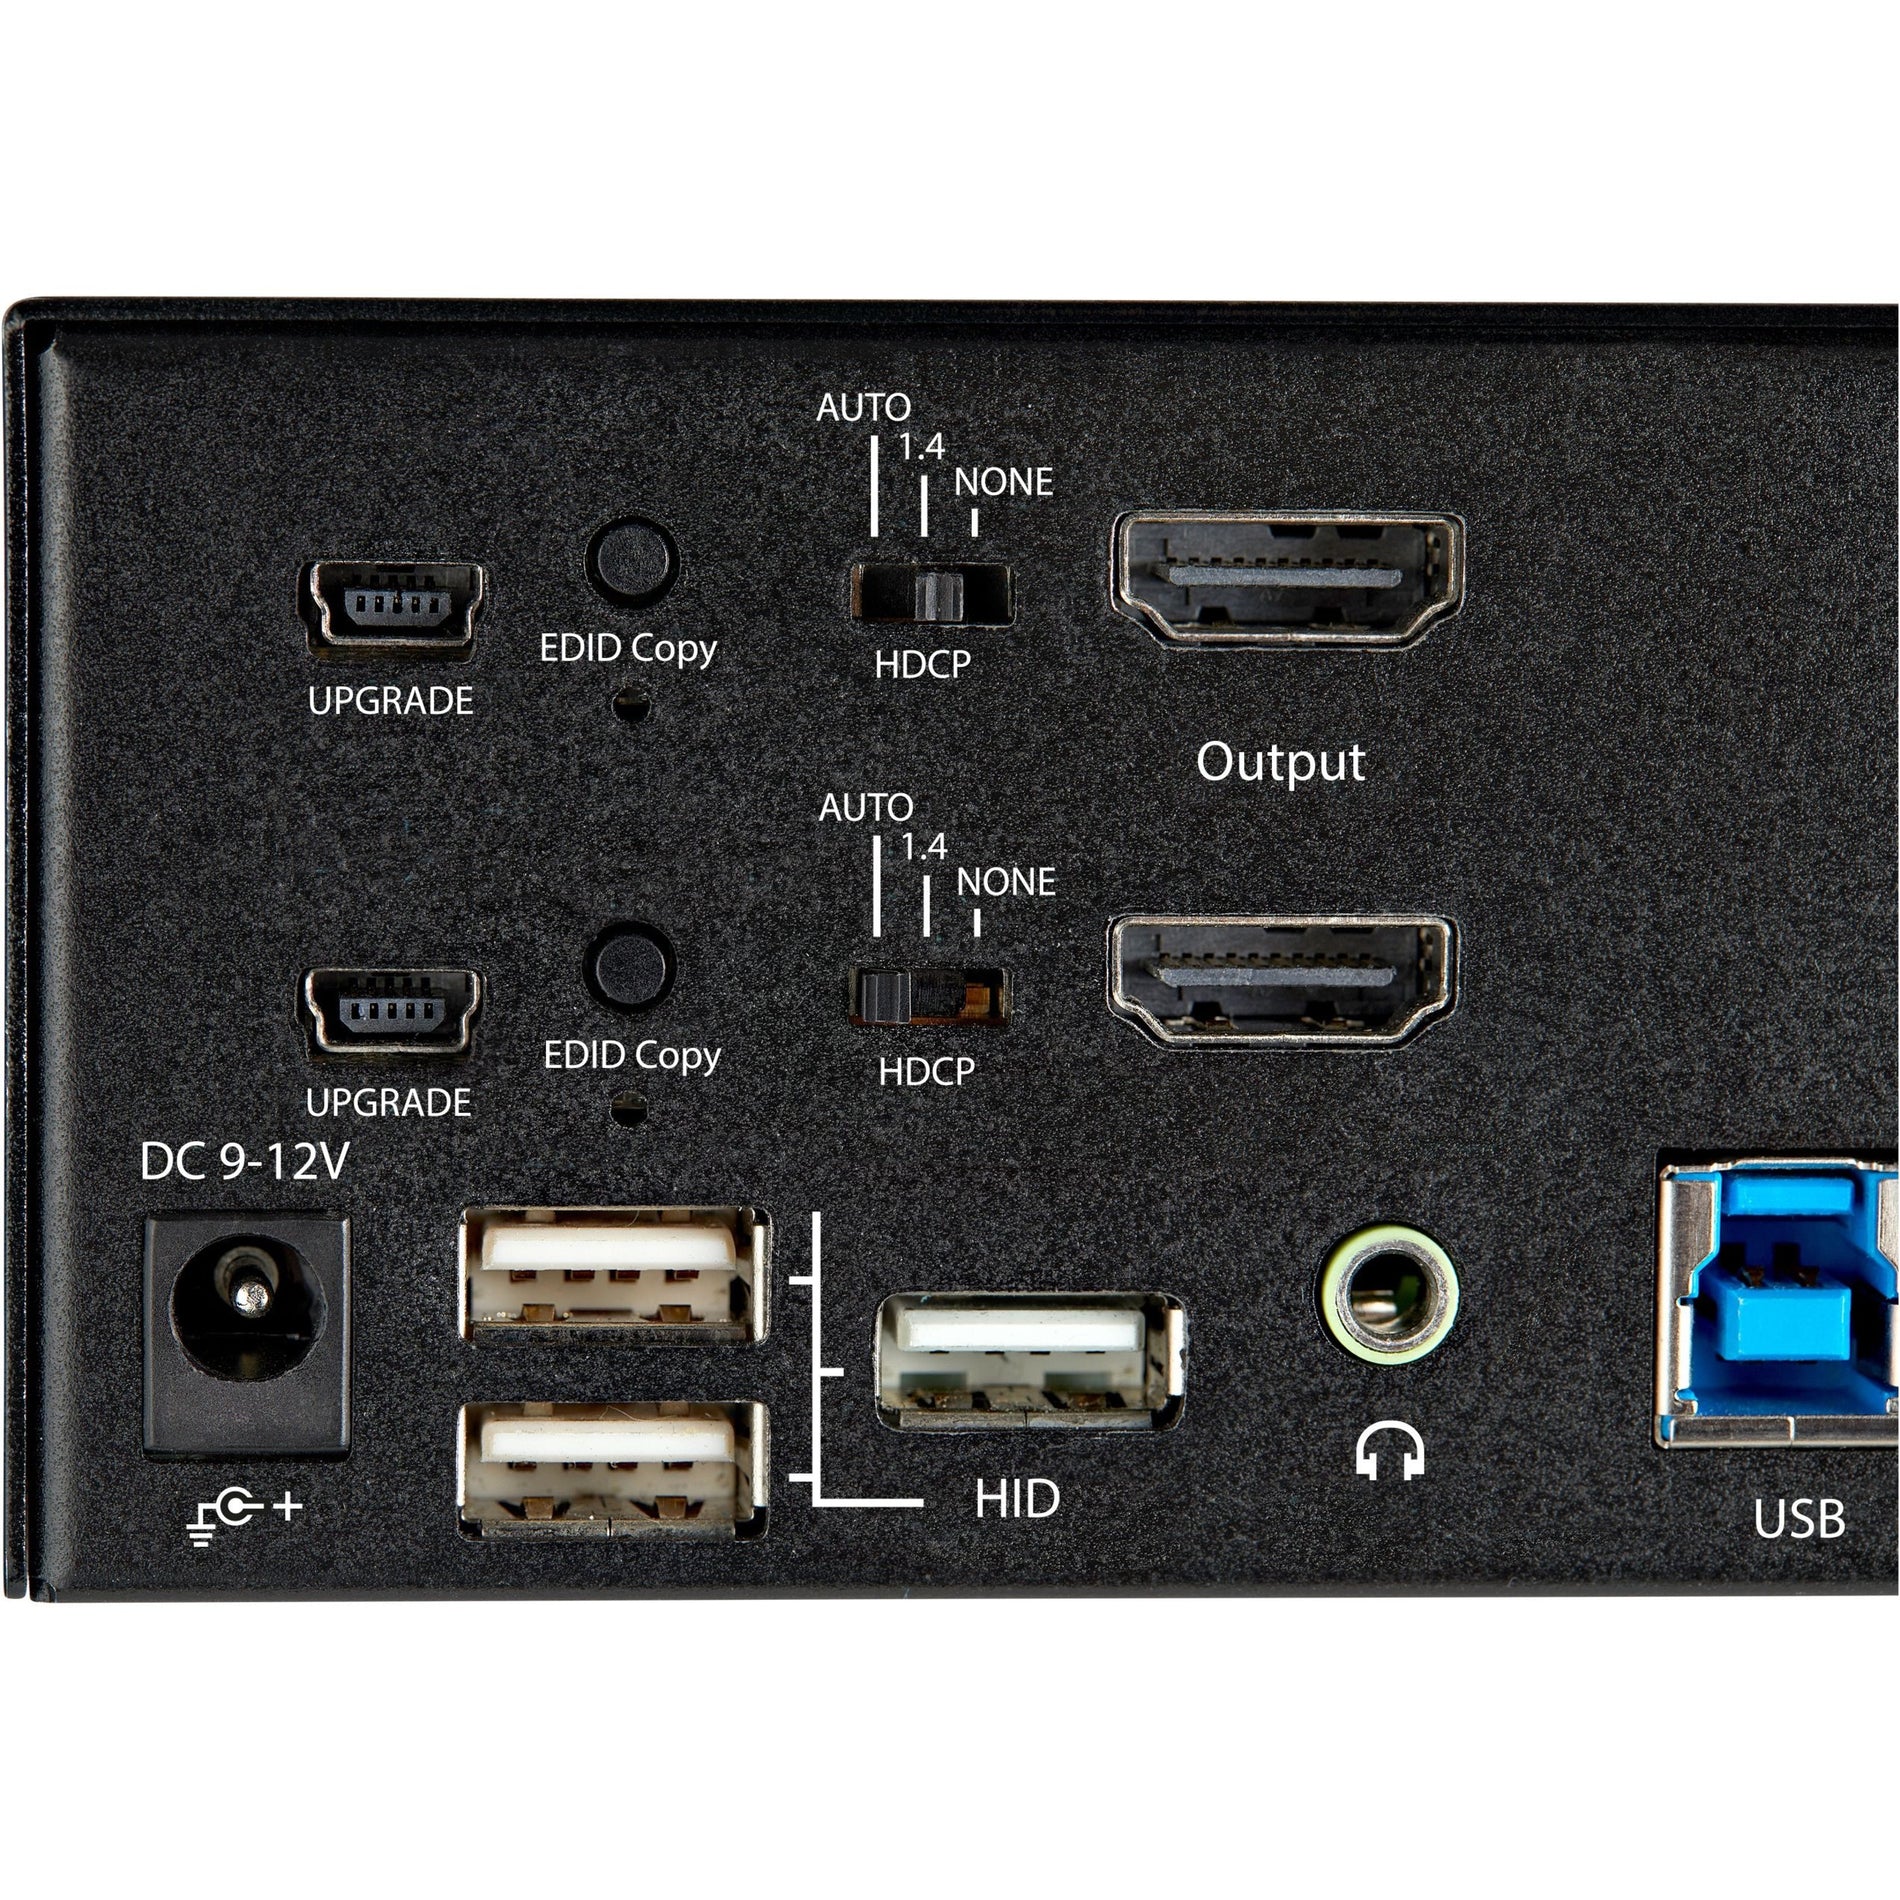 StarTech.com SV231DHU34K6 KVM Switch, 2 Port Dual Monitor HDMI, 4K 60Hz UHD HDR, USB 3.0 Hub, Audio